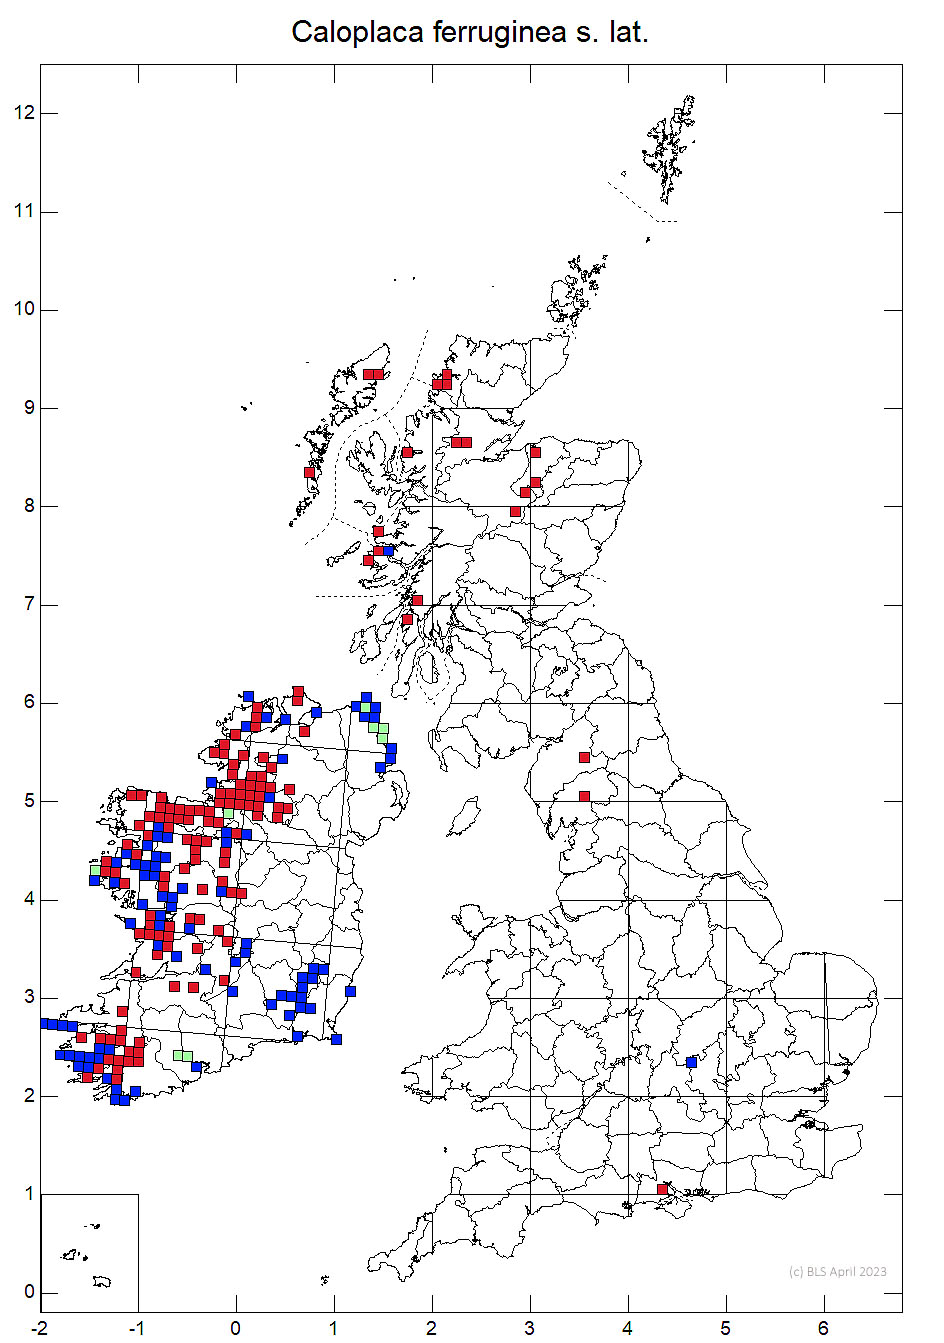 Caloplaca ferruginea s. lat. 10km sq distribution map